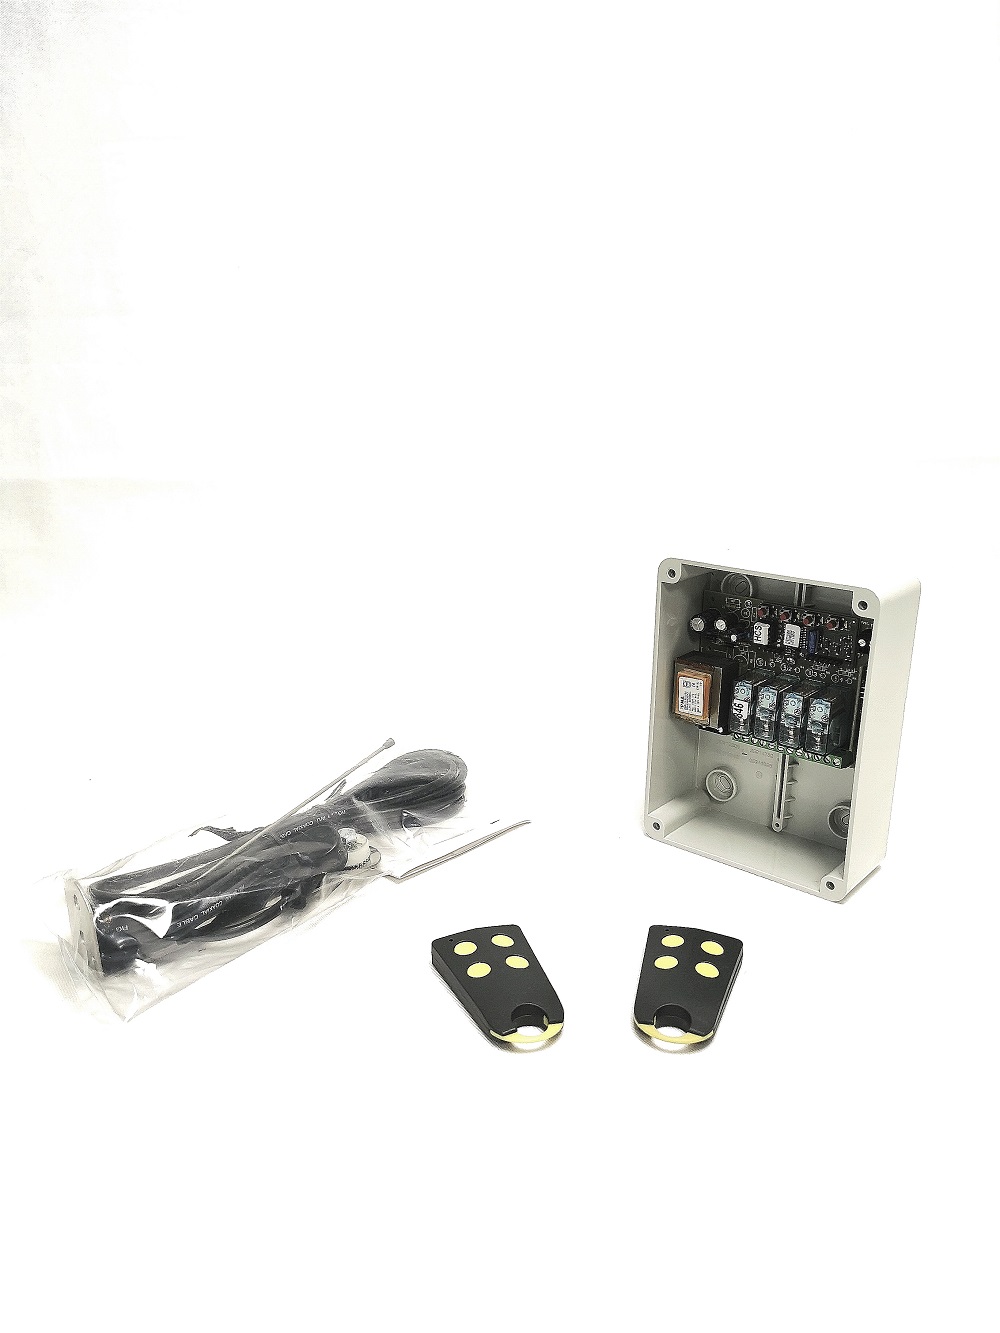 Kit radio Damik Nice Automatisme – KITJARDIN 1 récepteur + 2 émetteurs 4 boutons + 1 antenne